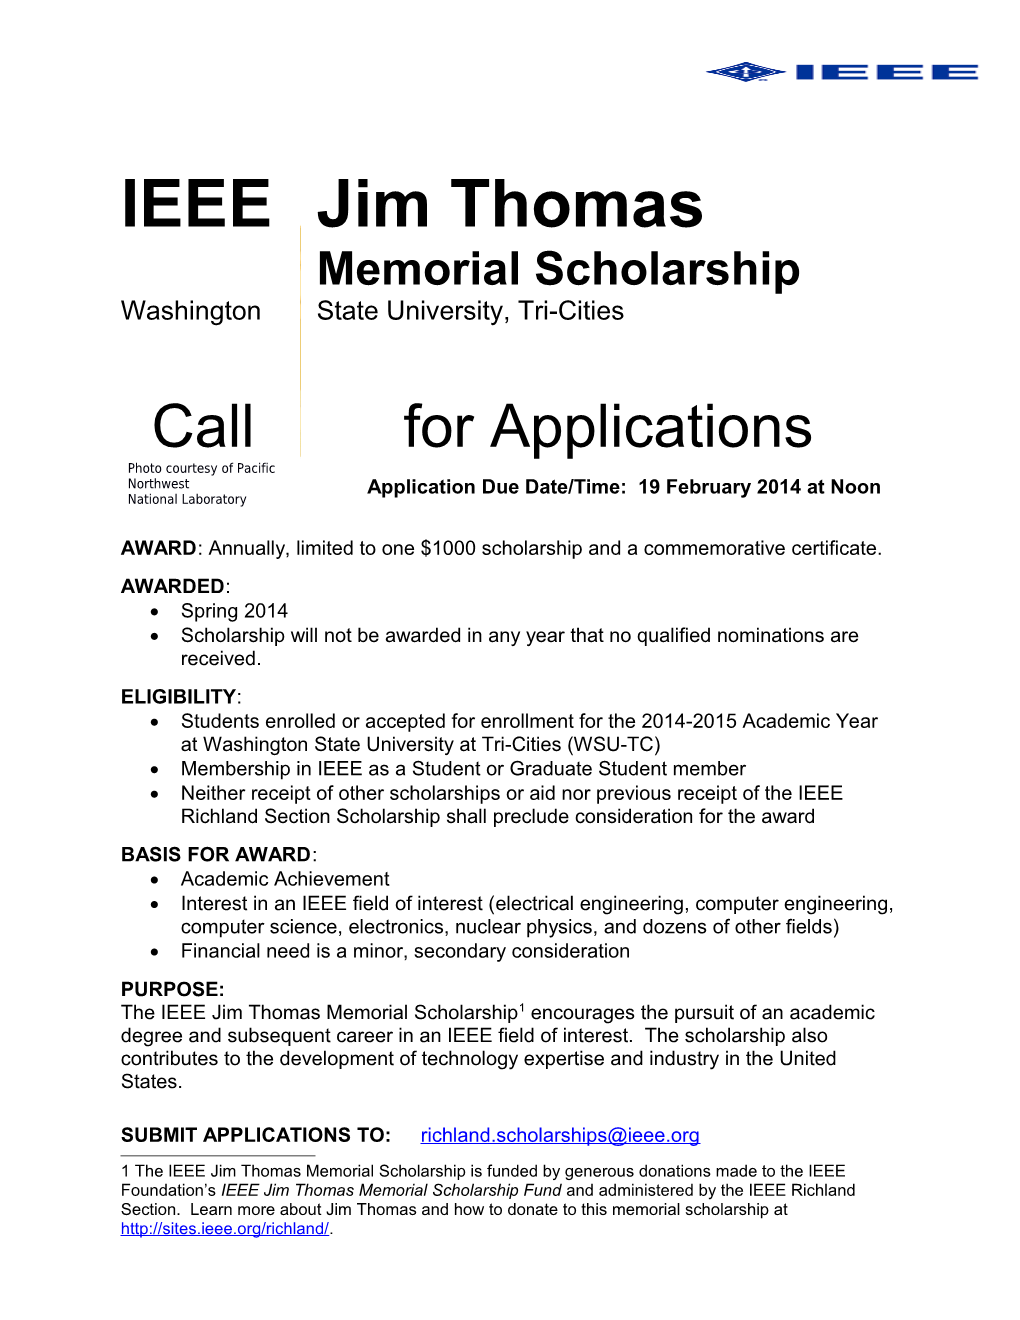 IEEE Jim Thomas